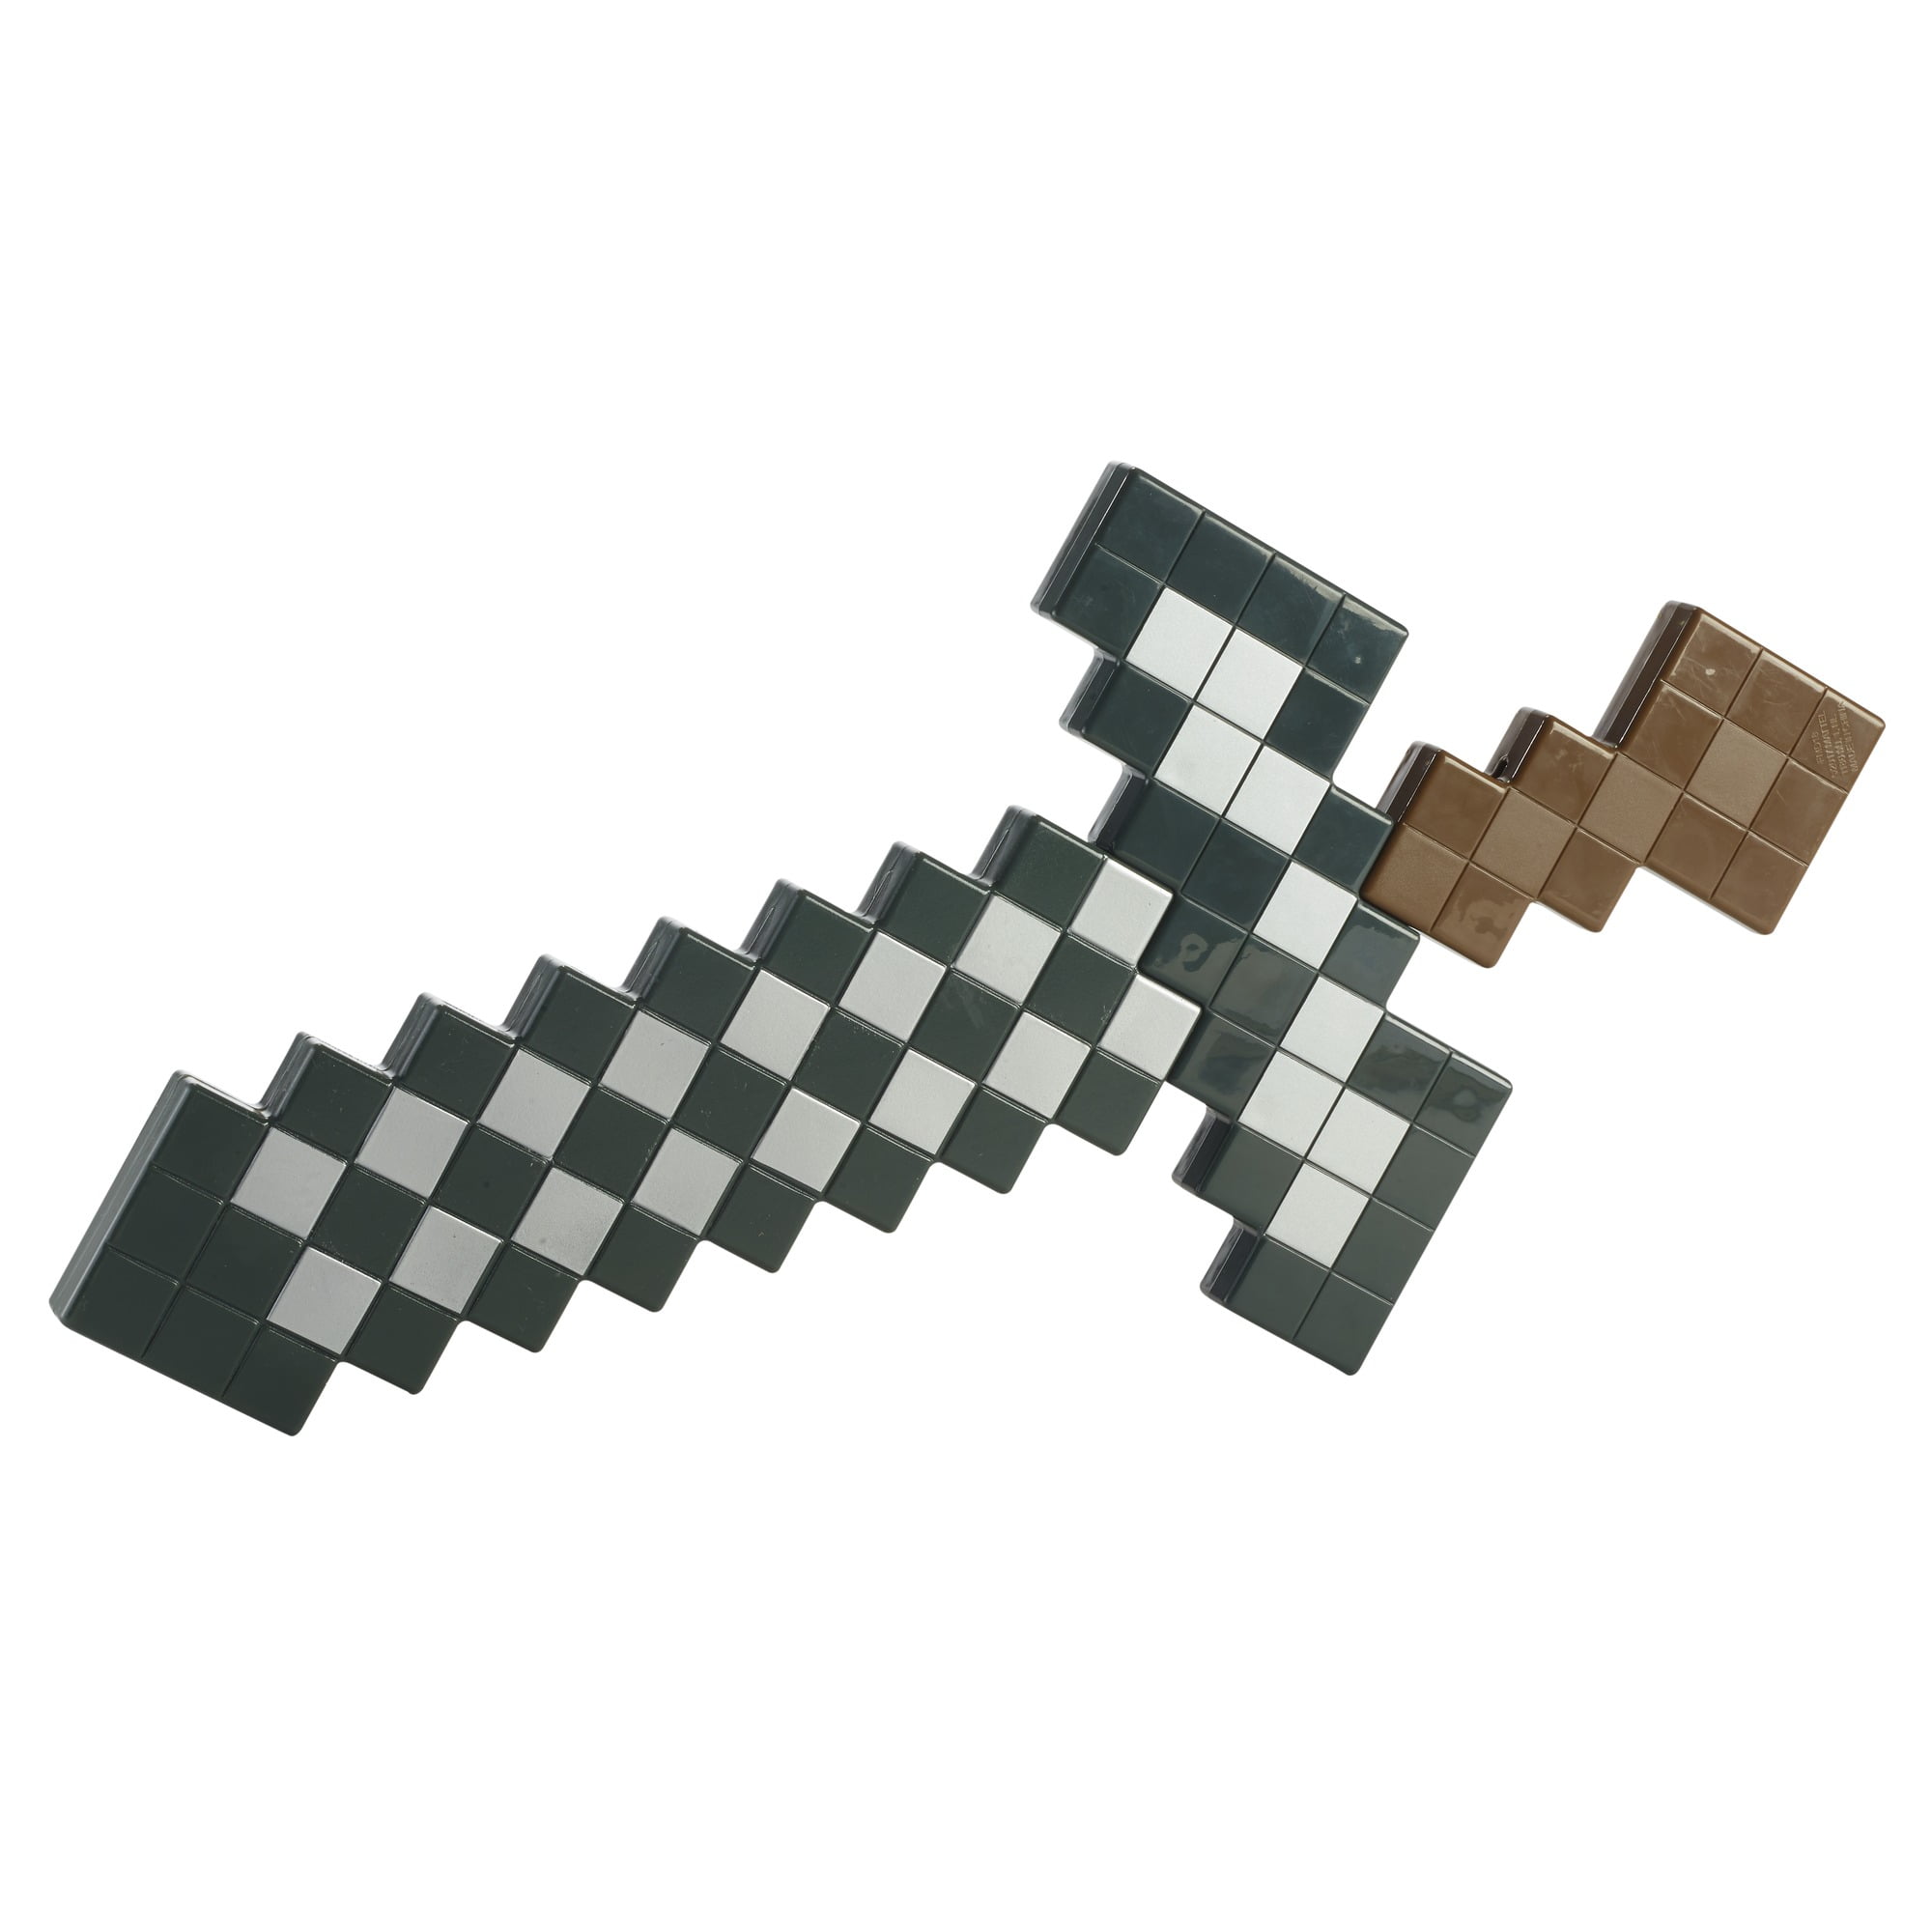 Toaster Pixel Art Minecraft